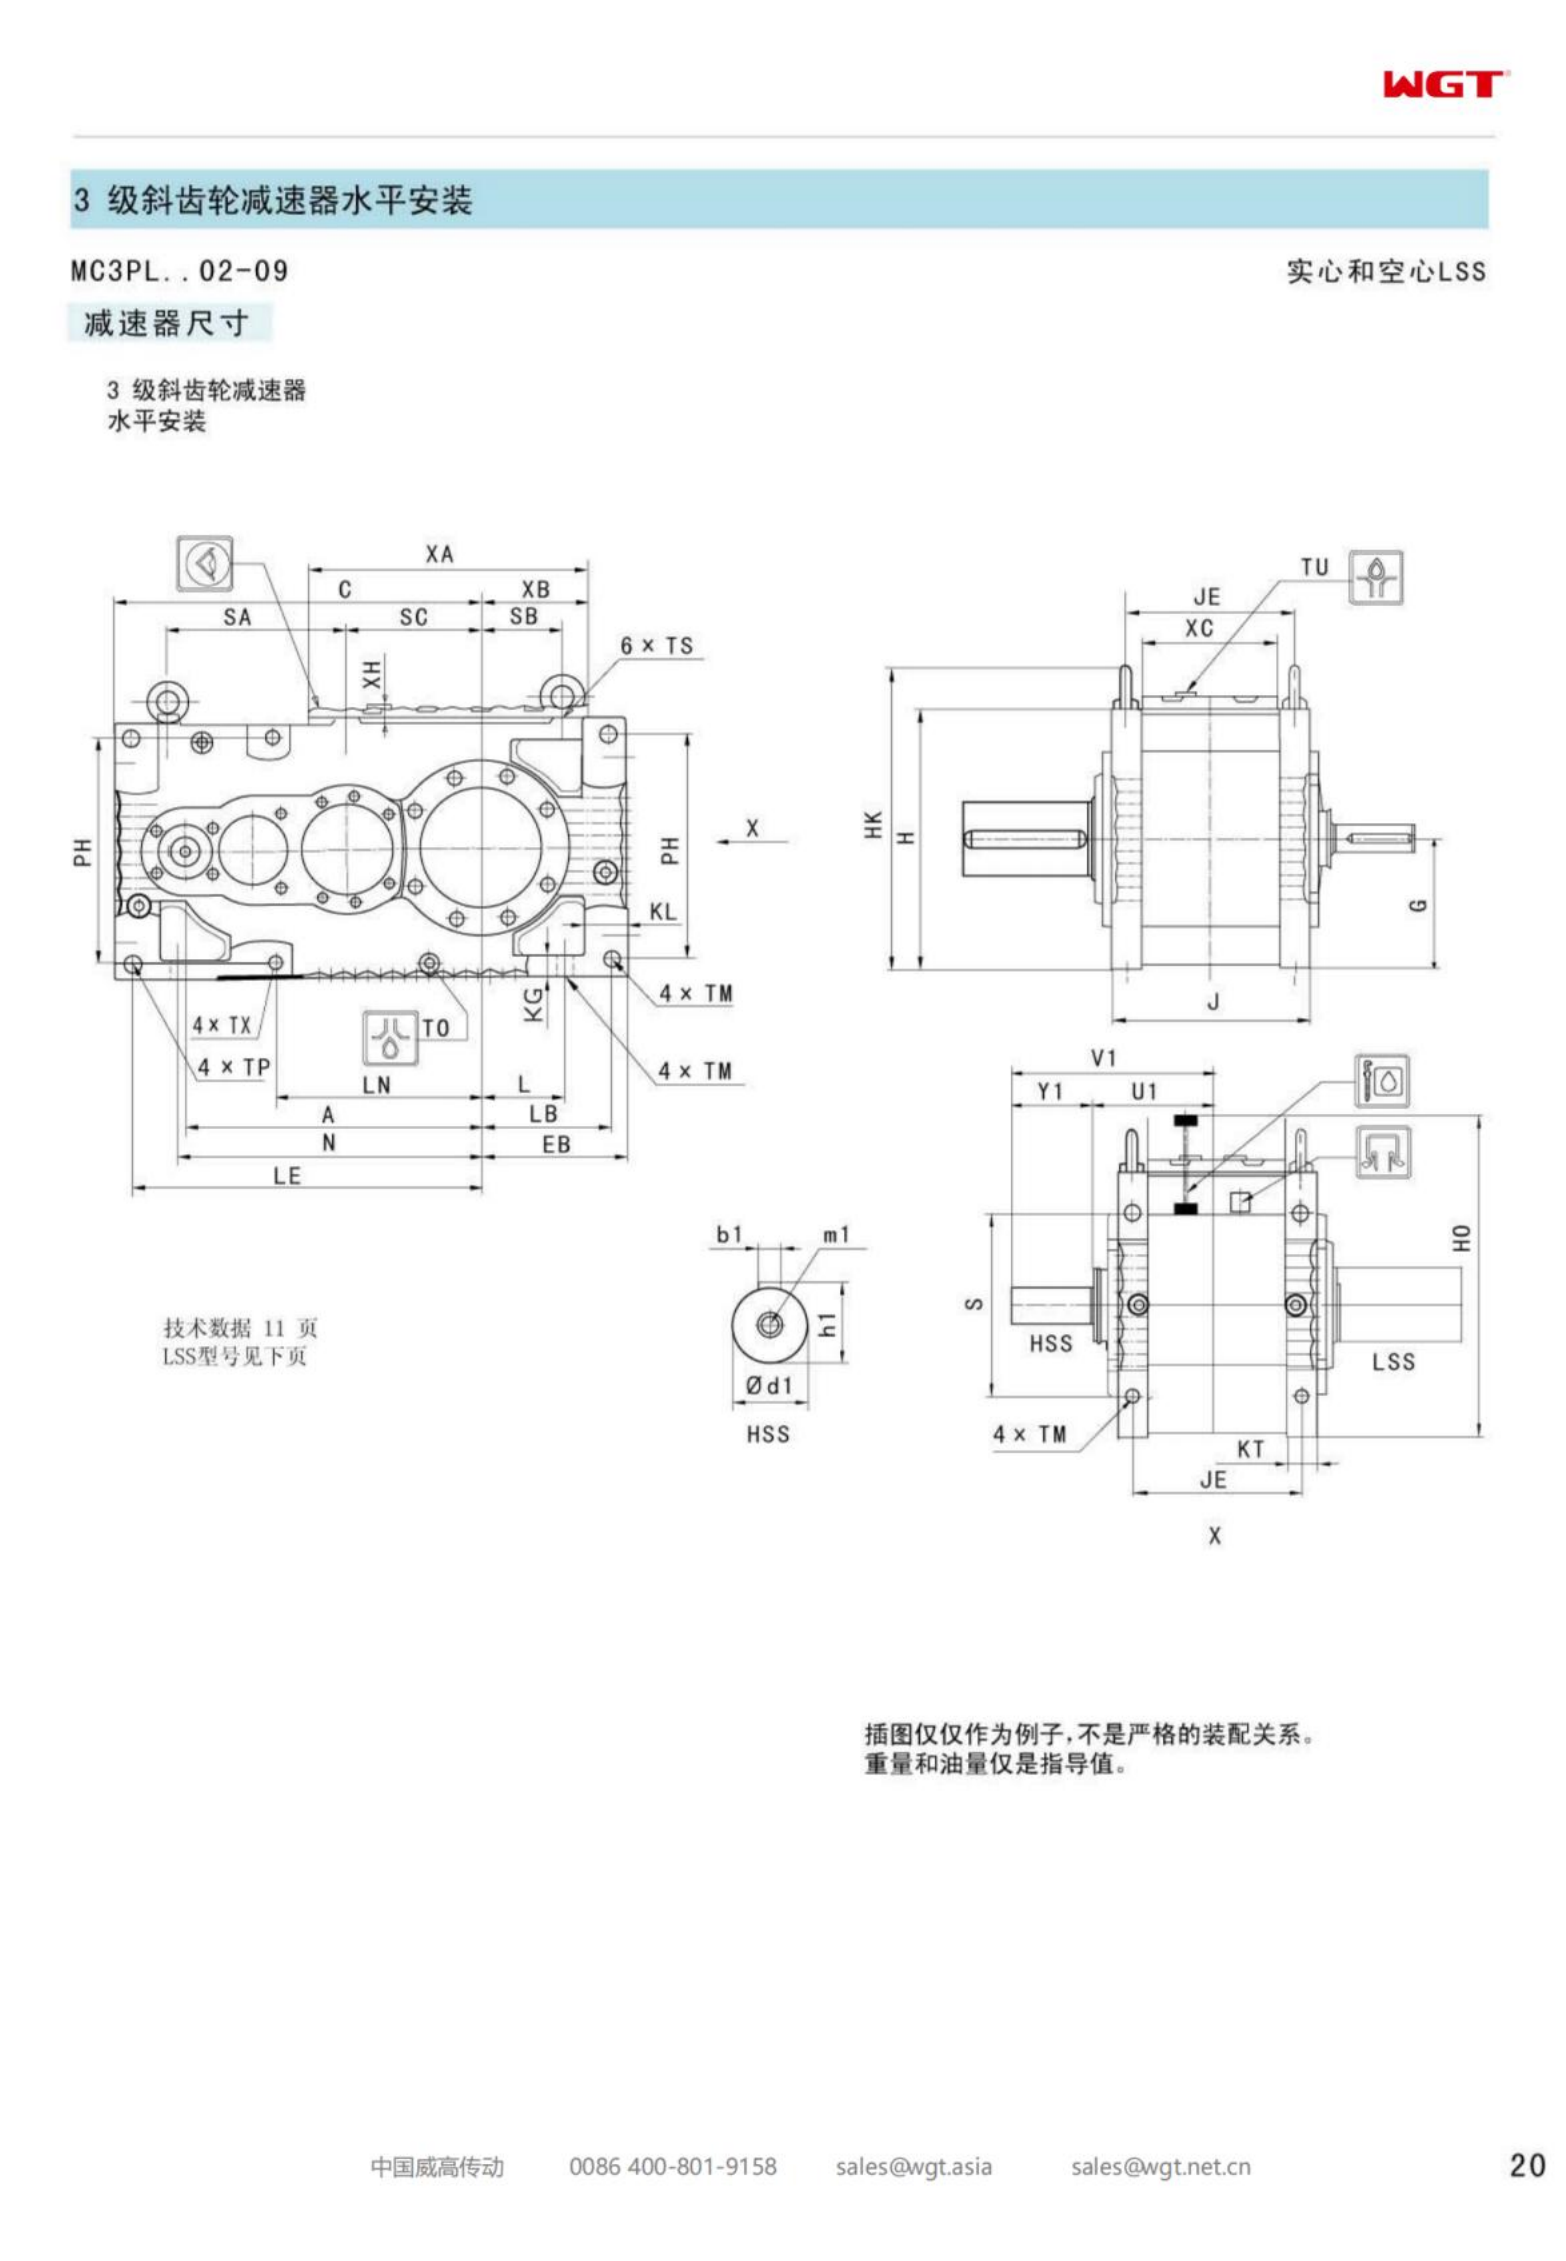 MC3PLHF07 replaces _SEW_MC_Series gearbox (patent)